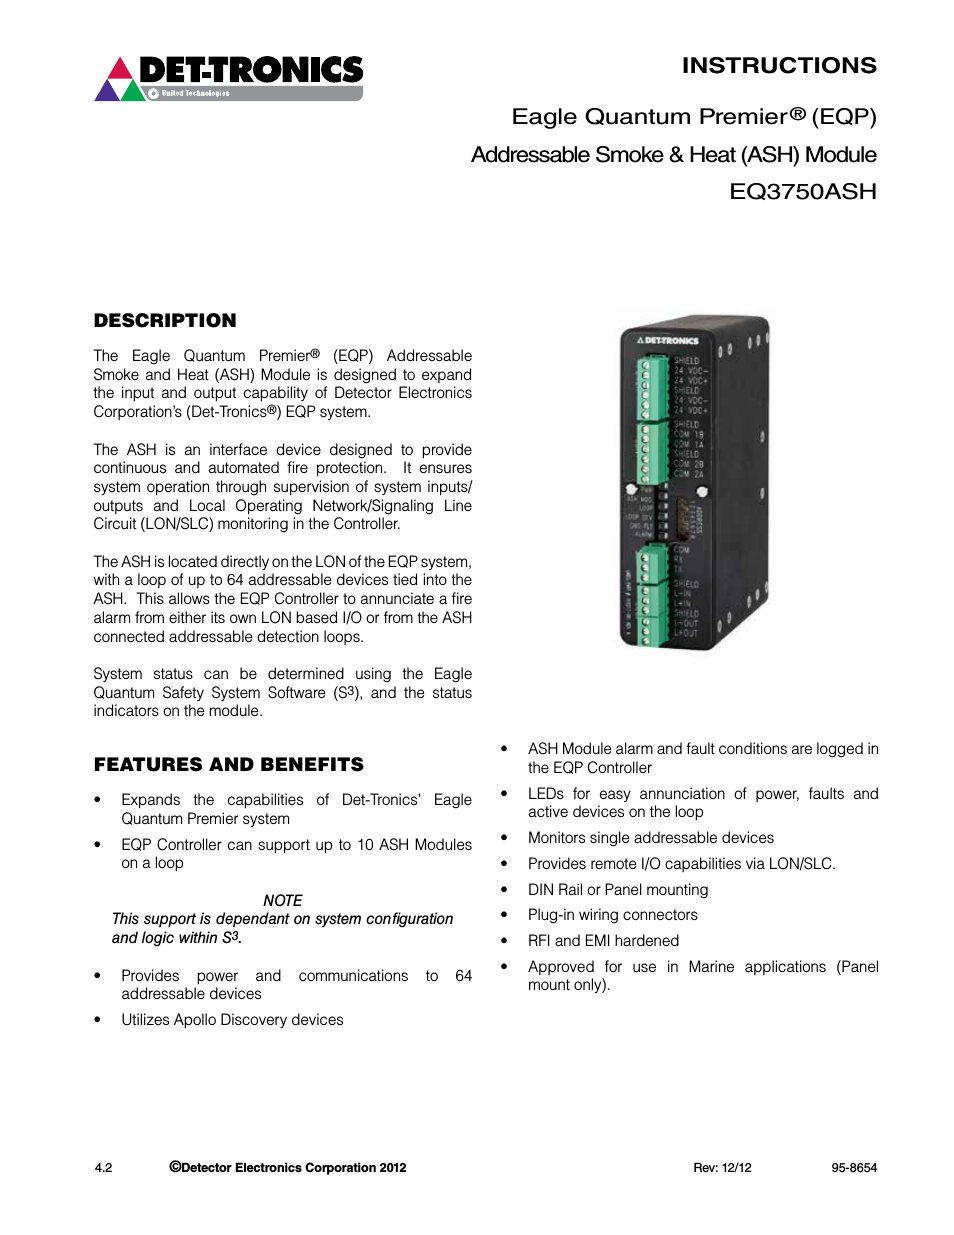 EQ3750ASH  EQP Addressable Smoke & Heat (ASH) Module